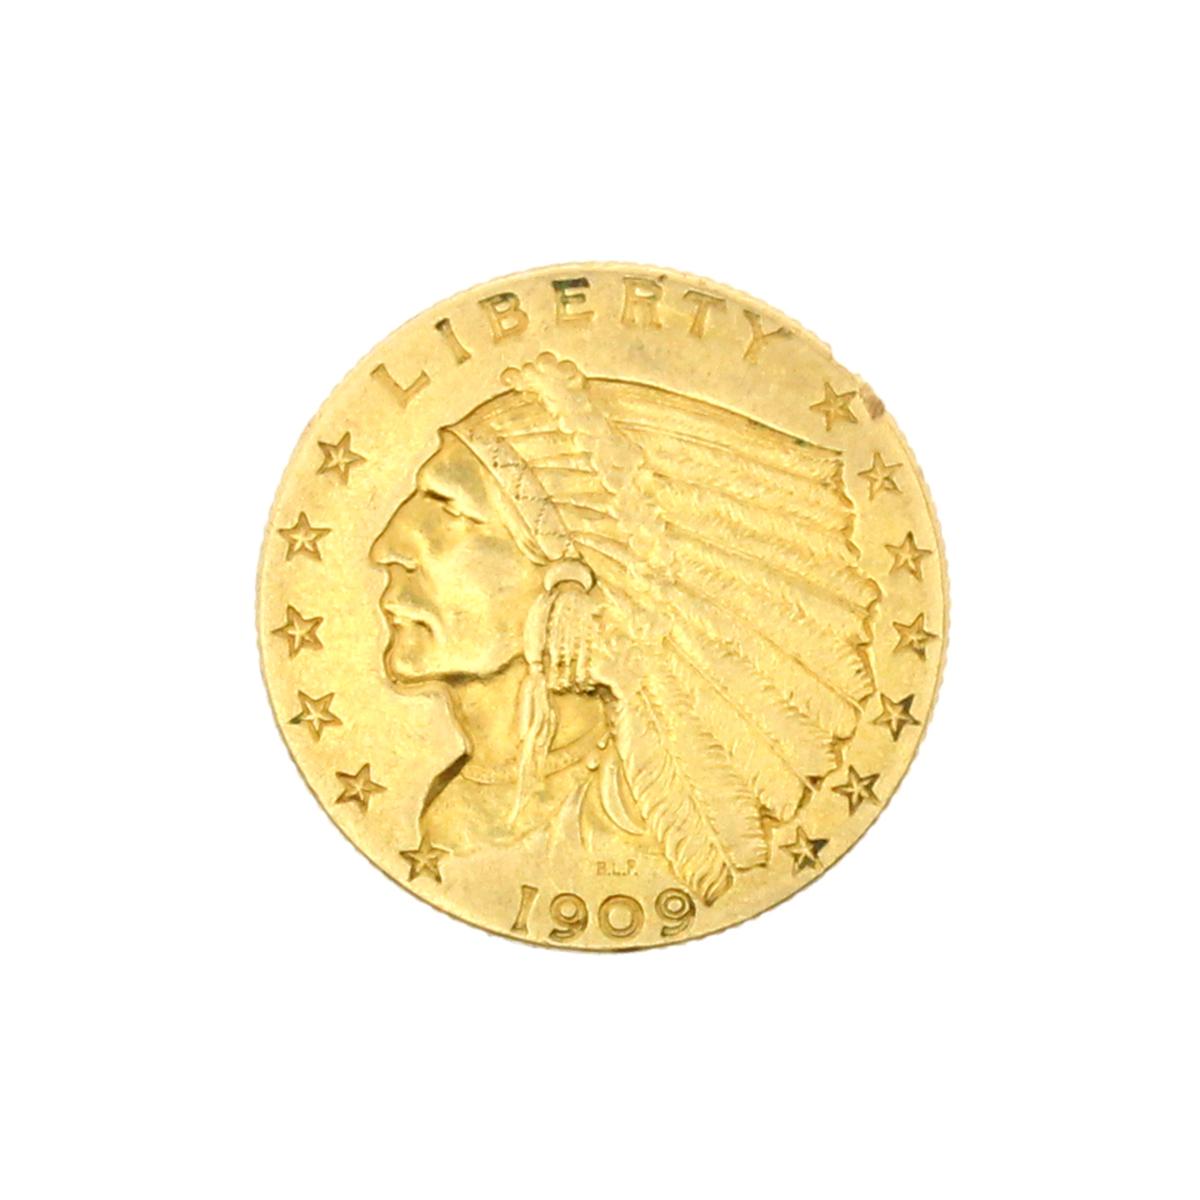 Rare 1909 $2.50 U.S. Indian Head Gold Coin